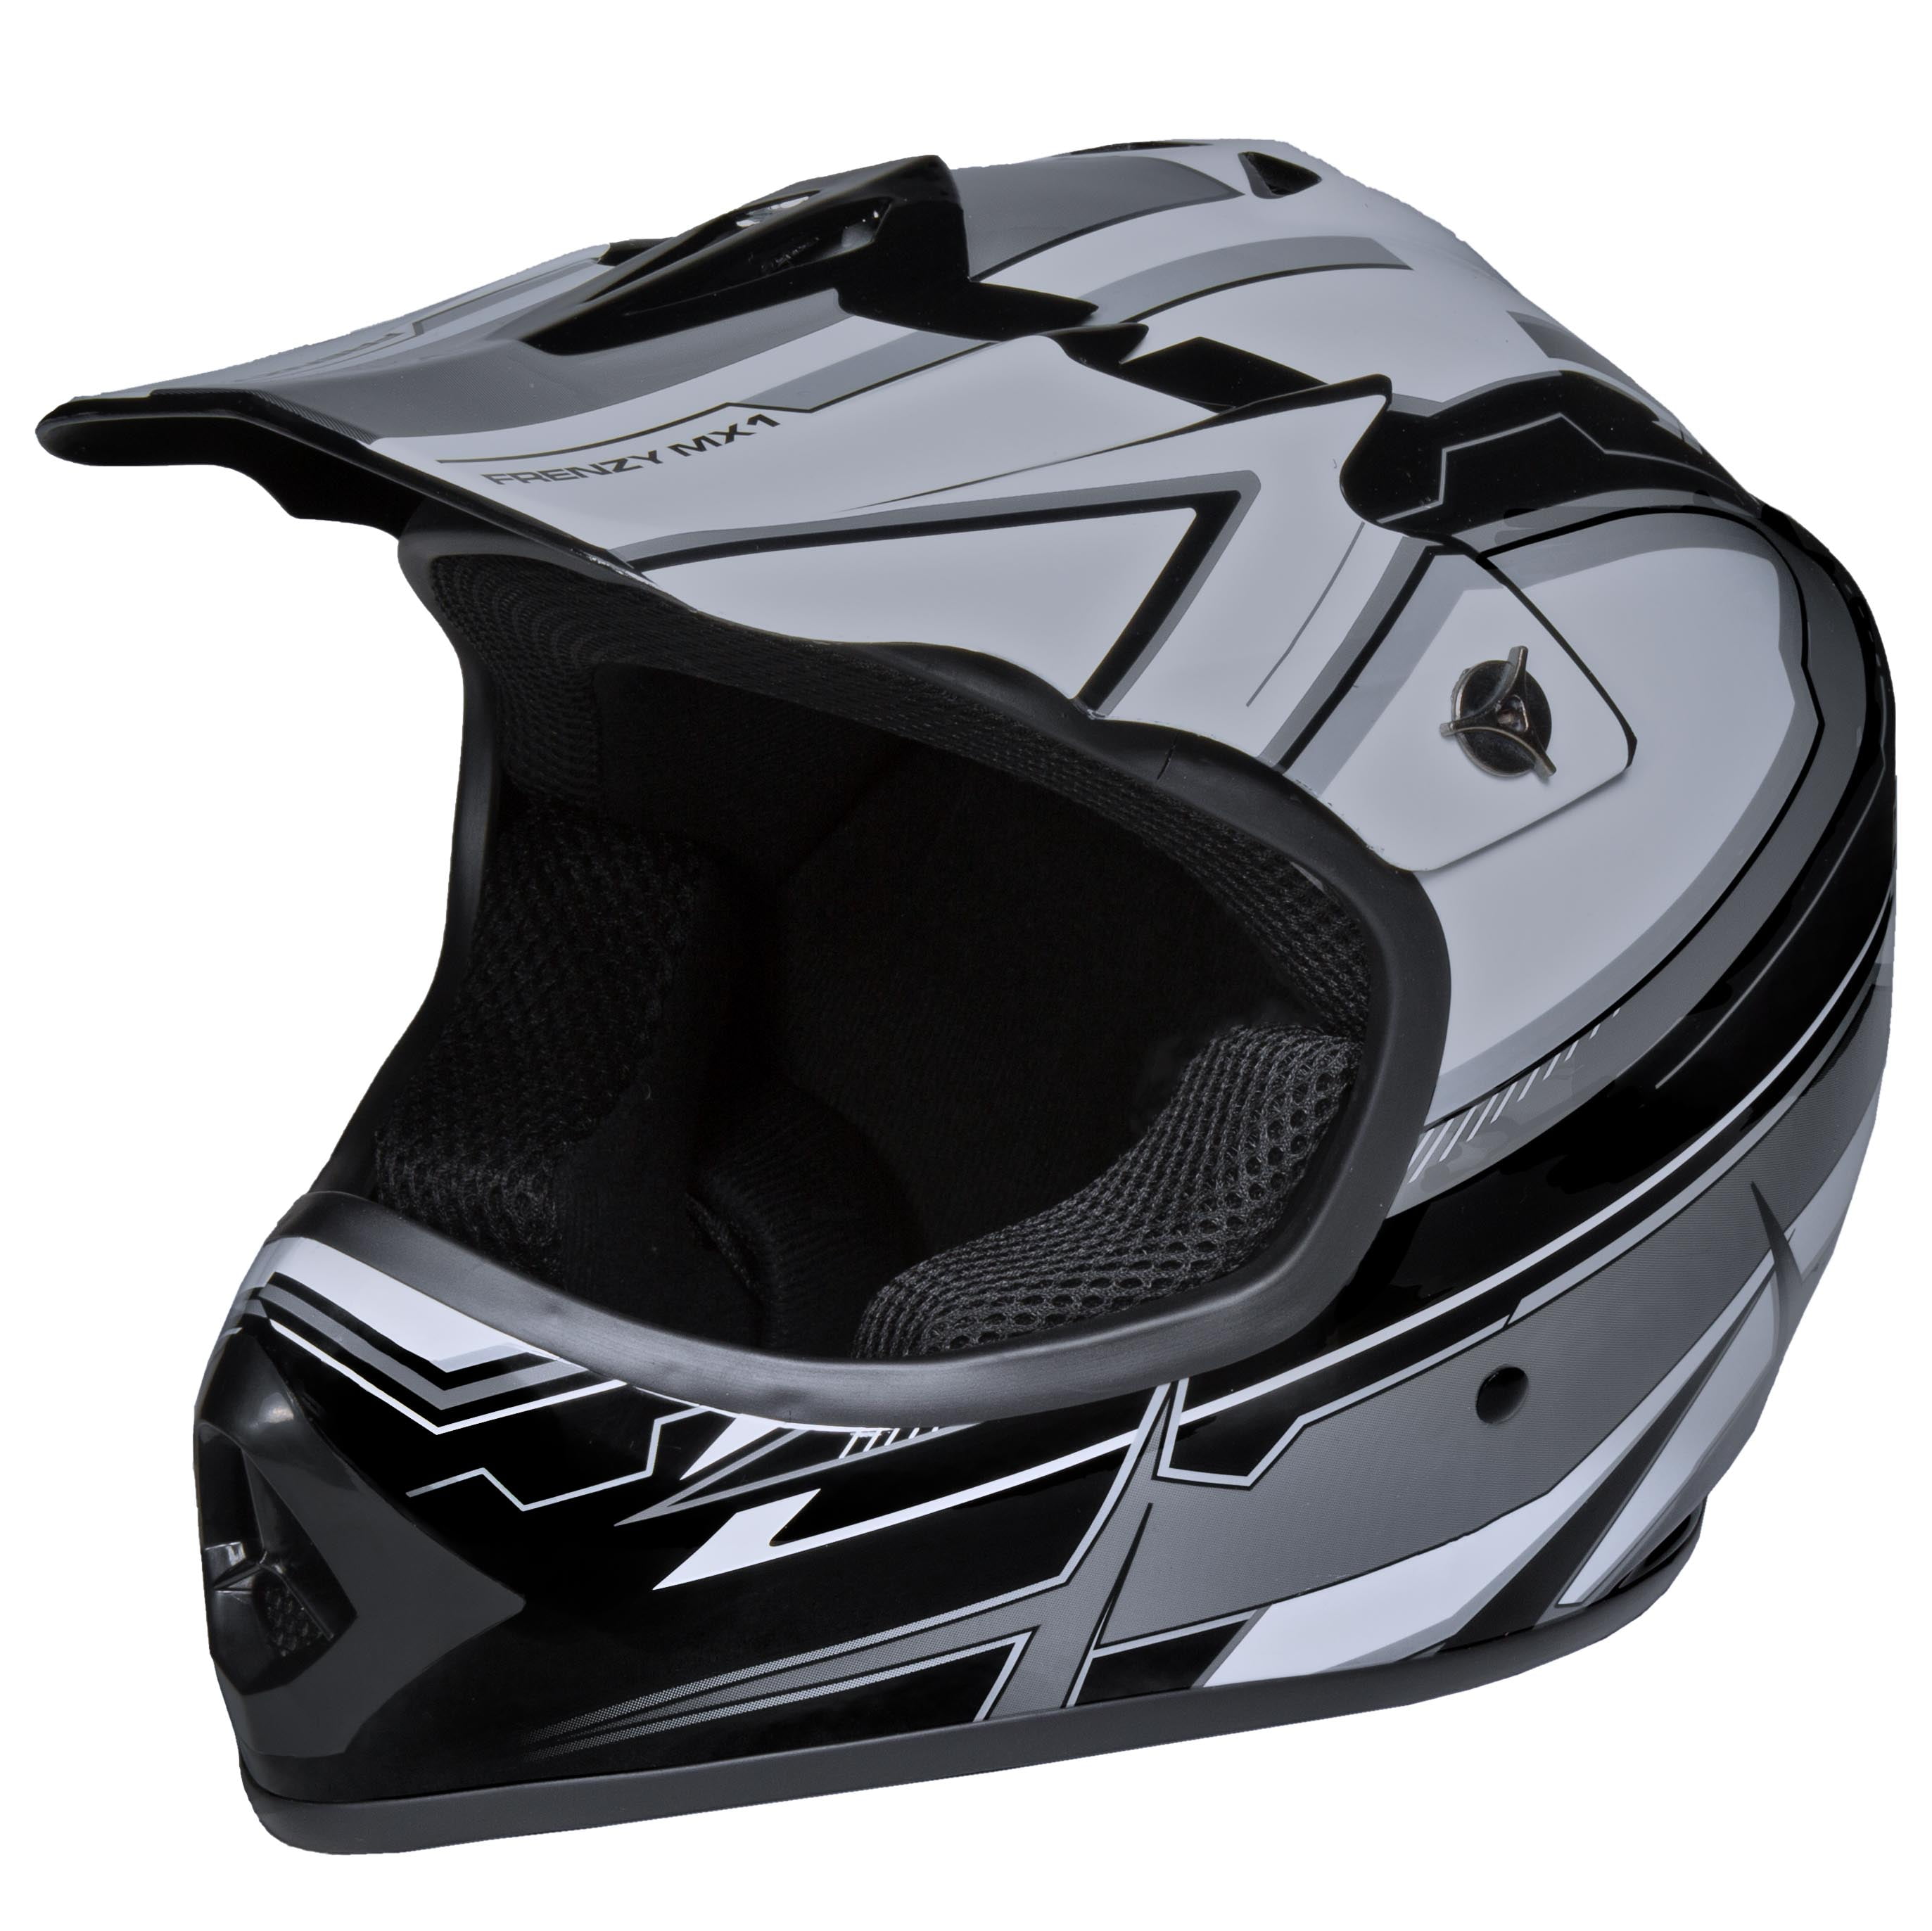 Universal Clear Pinlock Anti Fog Patch For Ls2 Motorcycle Full Face Helmet  Modular Capactet Ls2 Helmet Anti Fog Lens Film FZ8F# From Walmarts, $27.97